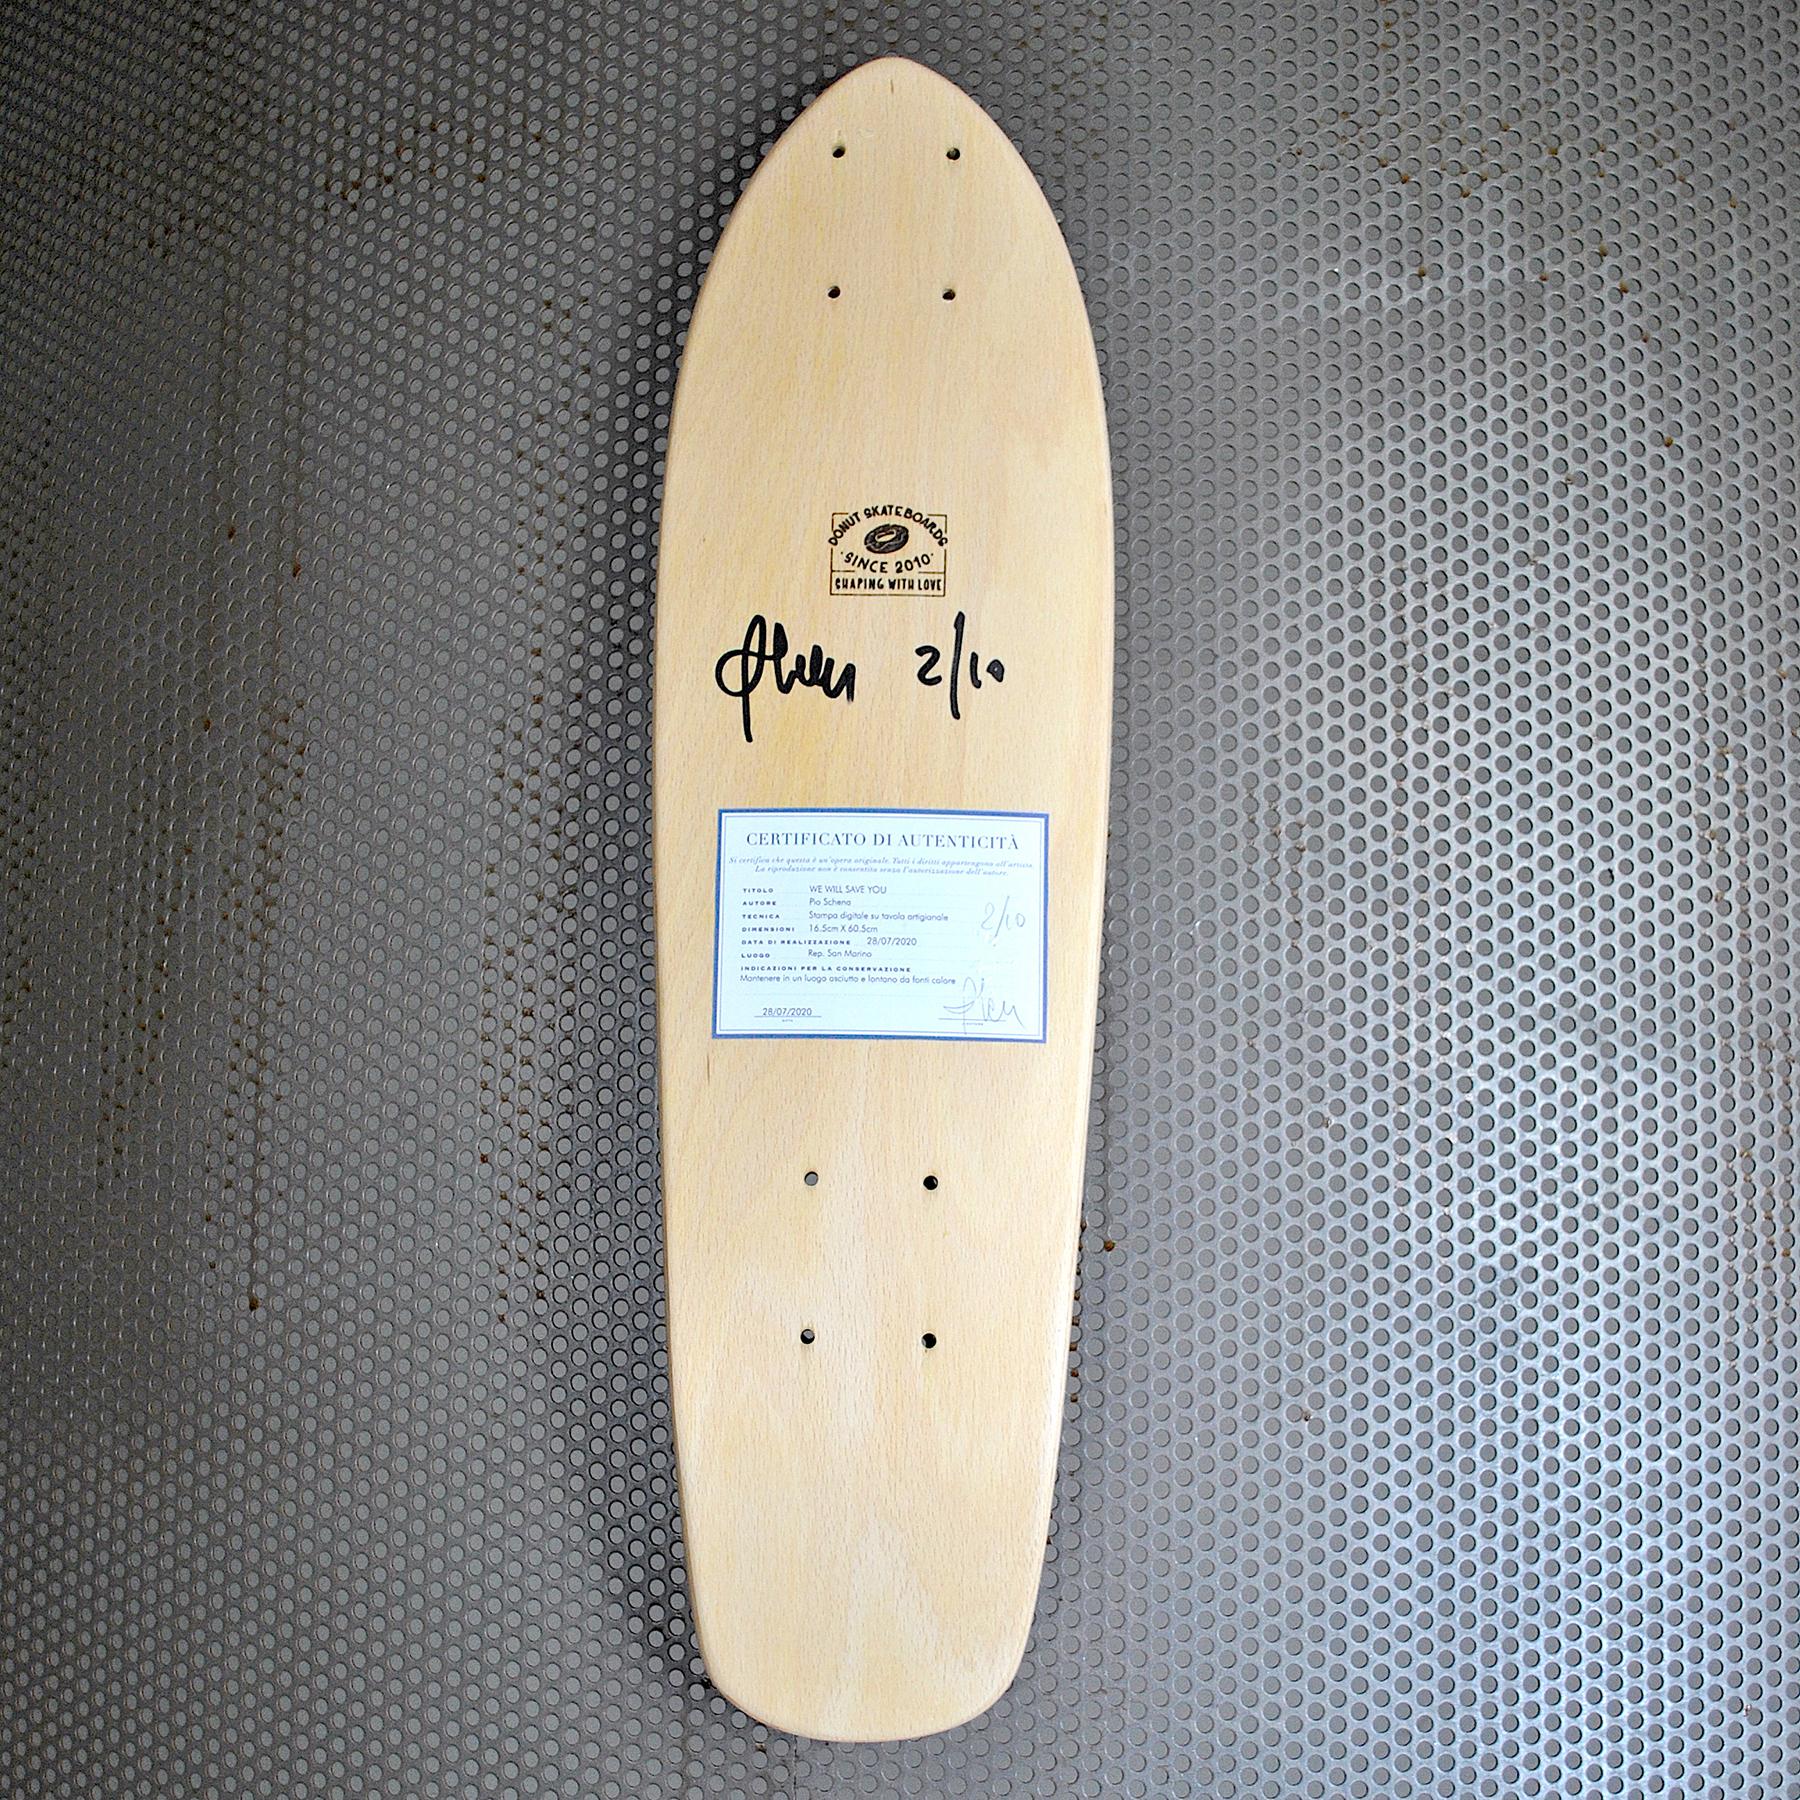 Contemporary Skate Deck Handmade Limited Edition by Pio Schena